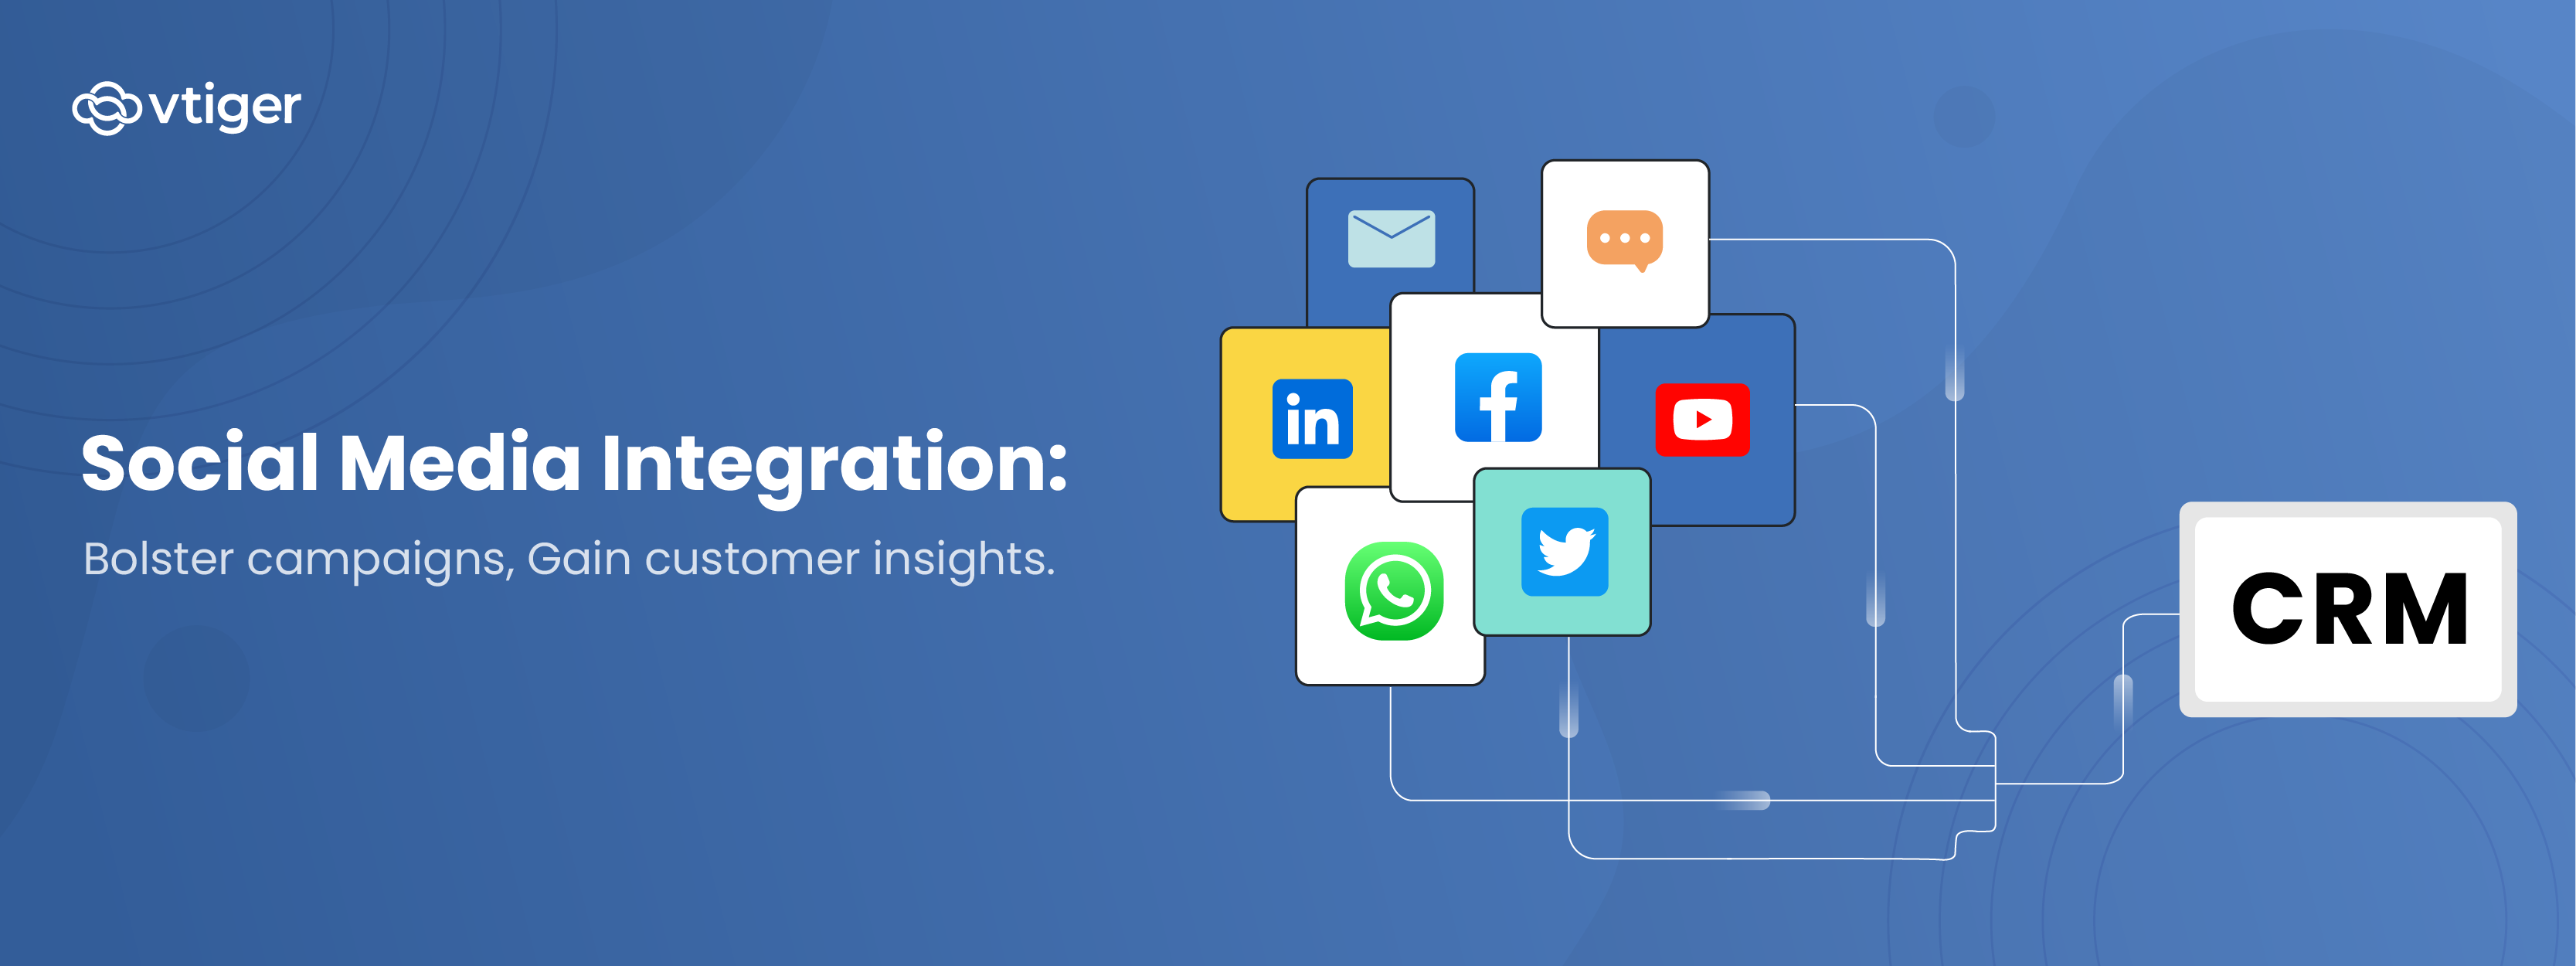 Social media integration Banner image 2